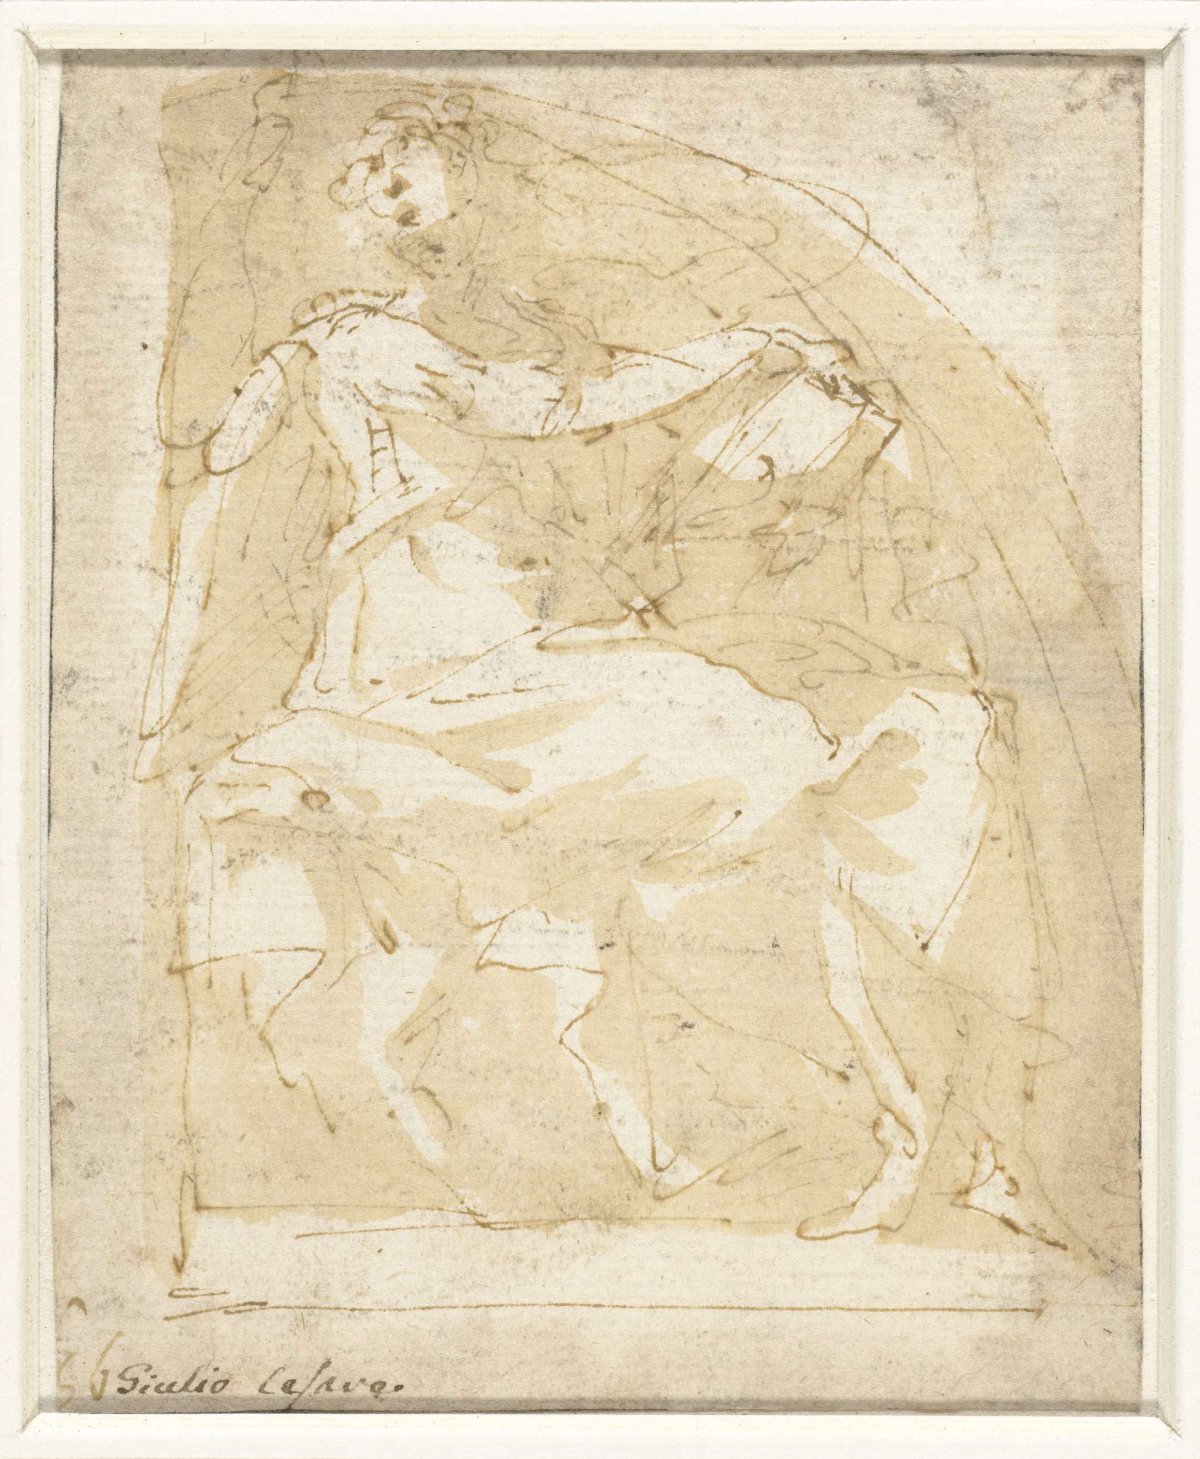 Angel with a book, Giulio Cesare Procaccini, 1584 - 1625